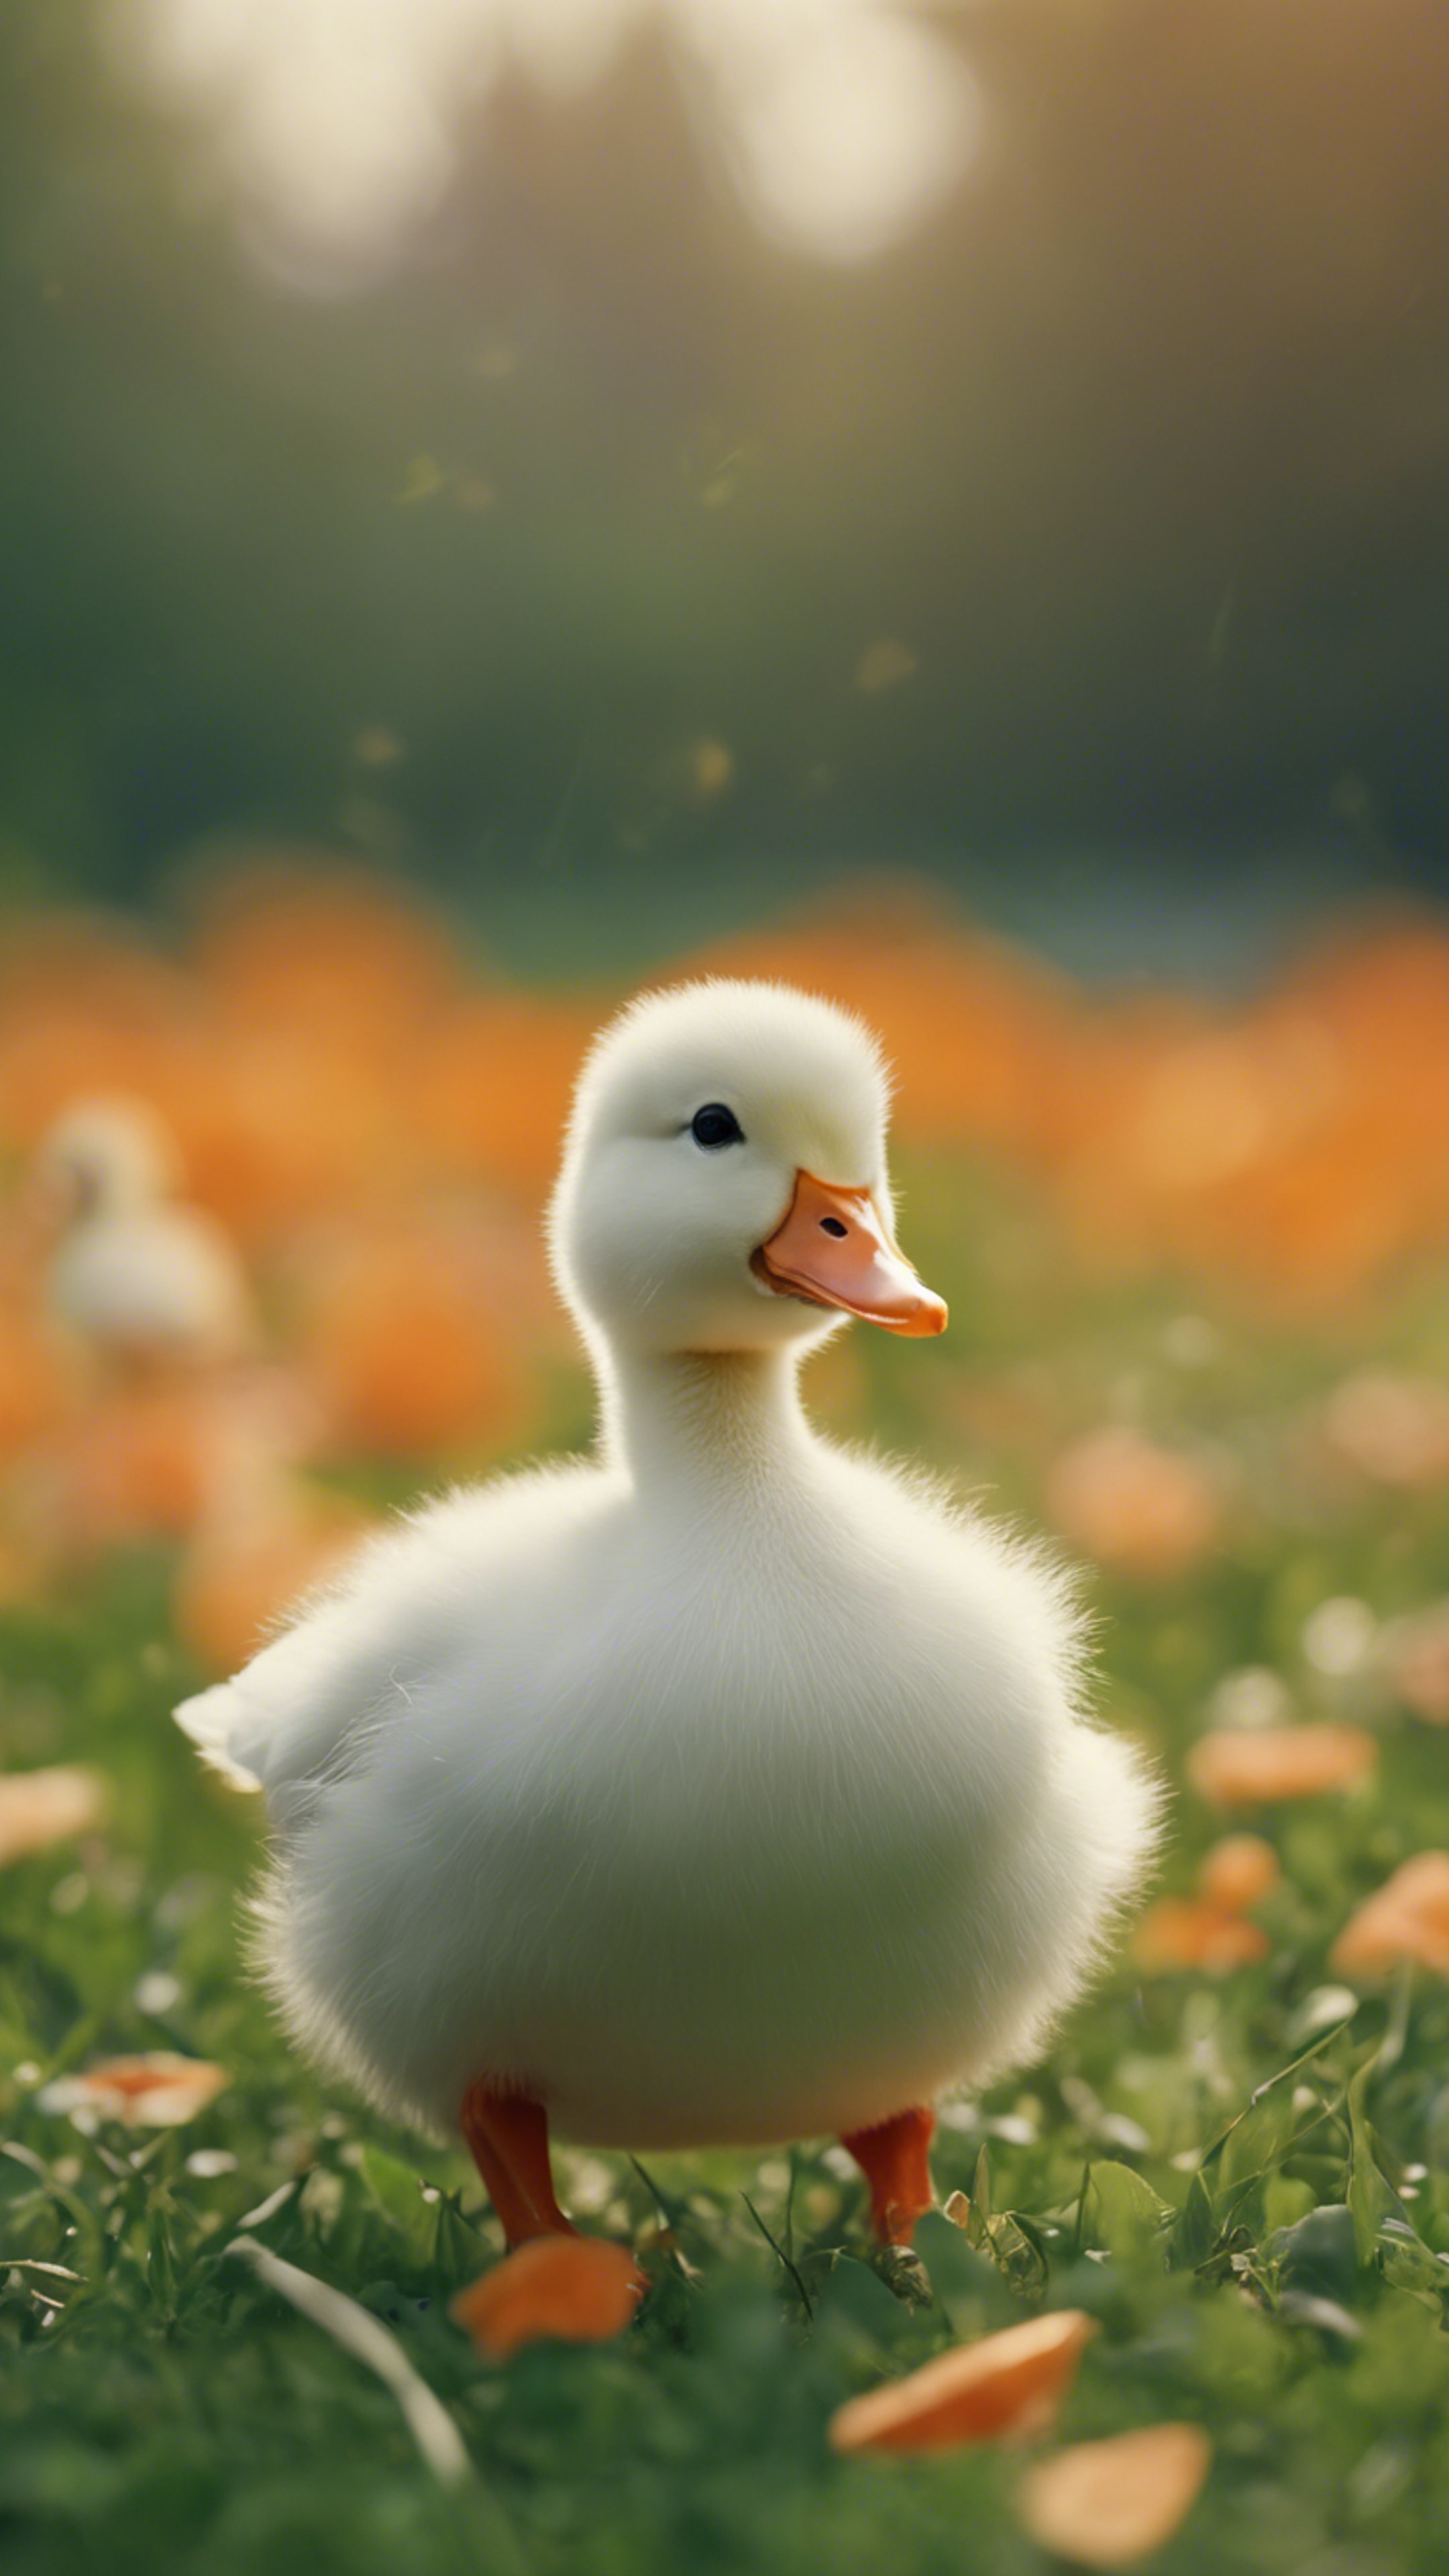 An adorable fluffy white duck with a bright orange bill is waddling happily across a green meadow. Divar kağızı[c976b0c80c1040dead0f]